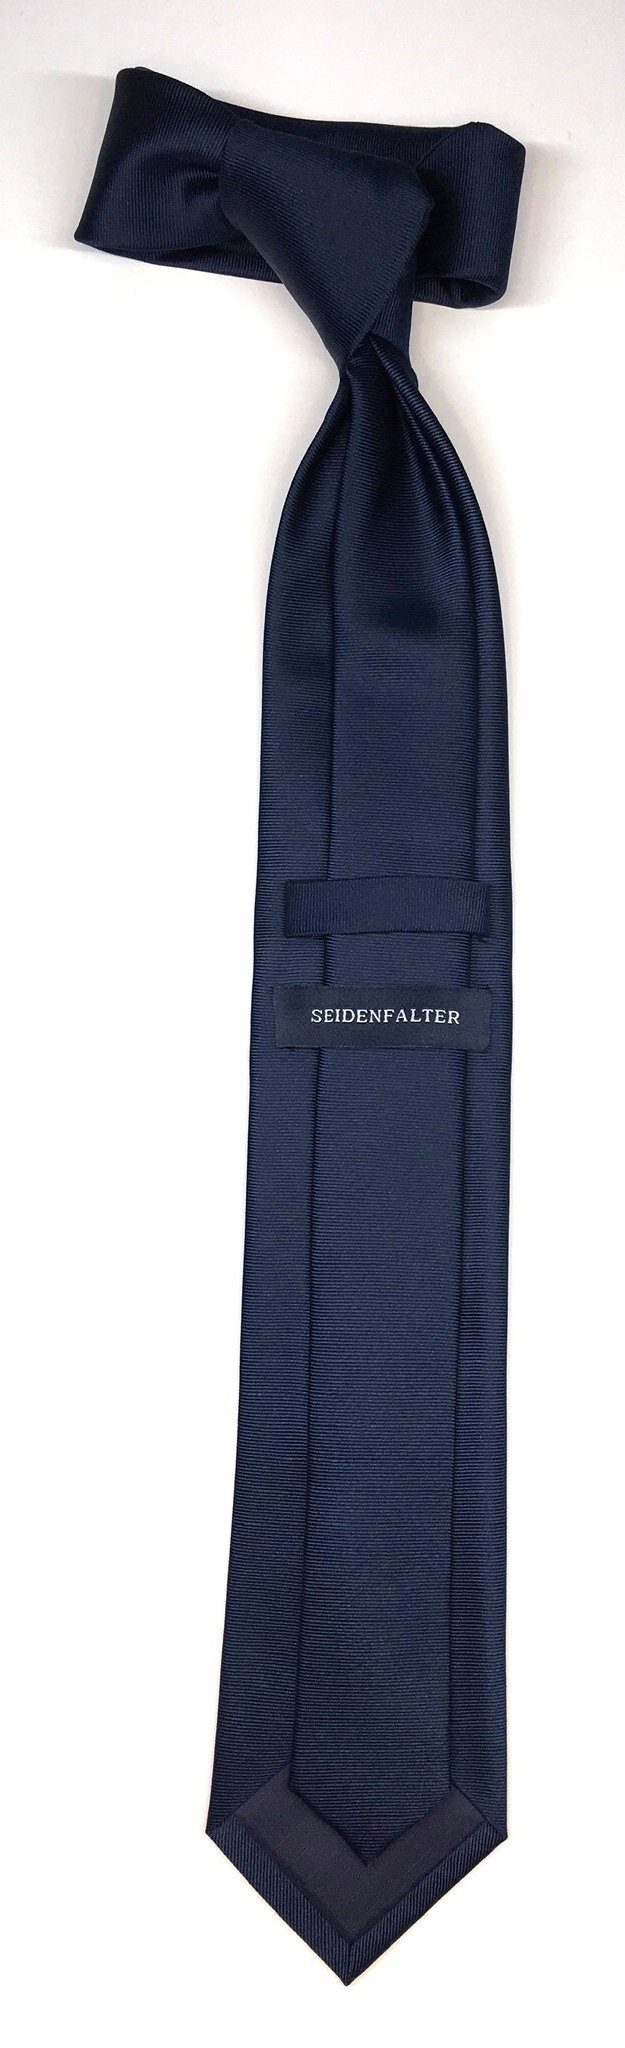 Seidenfalter Krawatte Uni 7cm Marine Krawatte im Seidenfalter Krawatte edlen Uni Design Seidenfalter